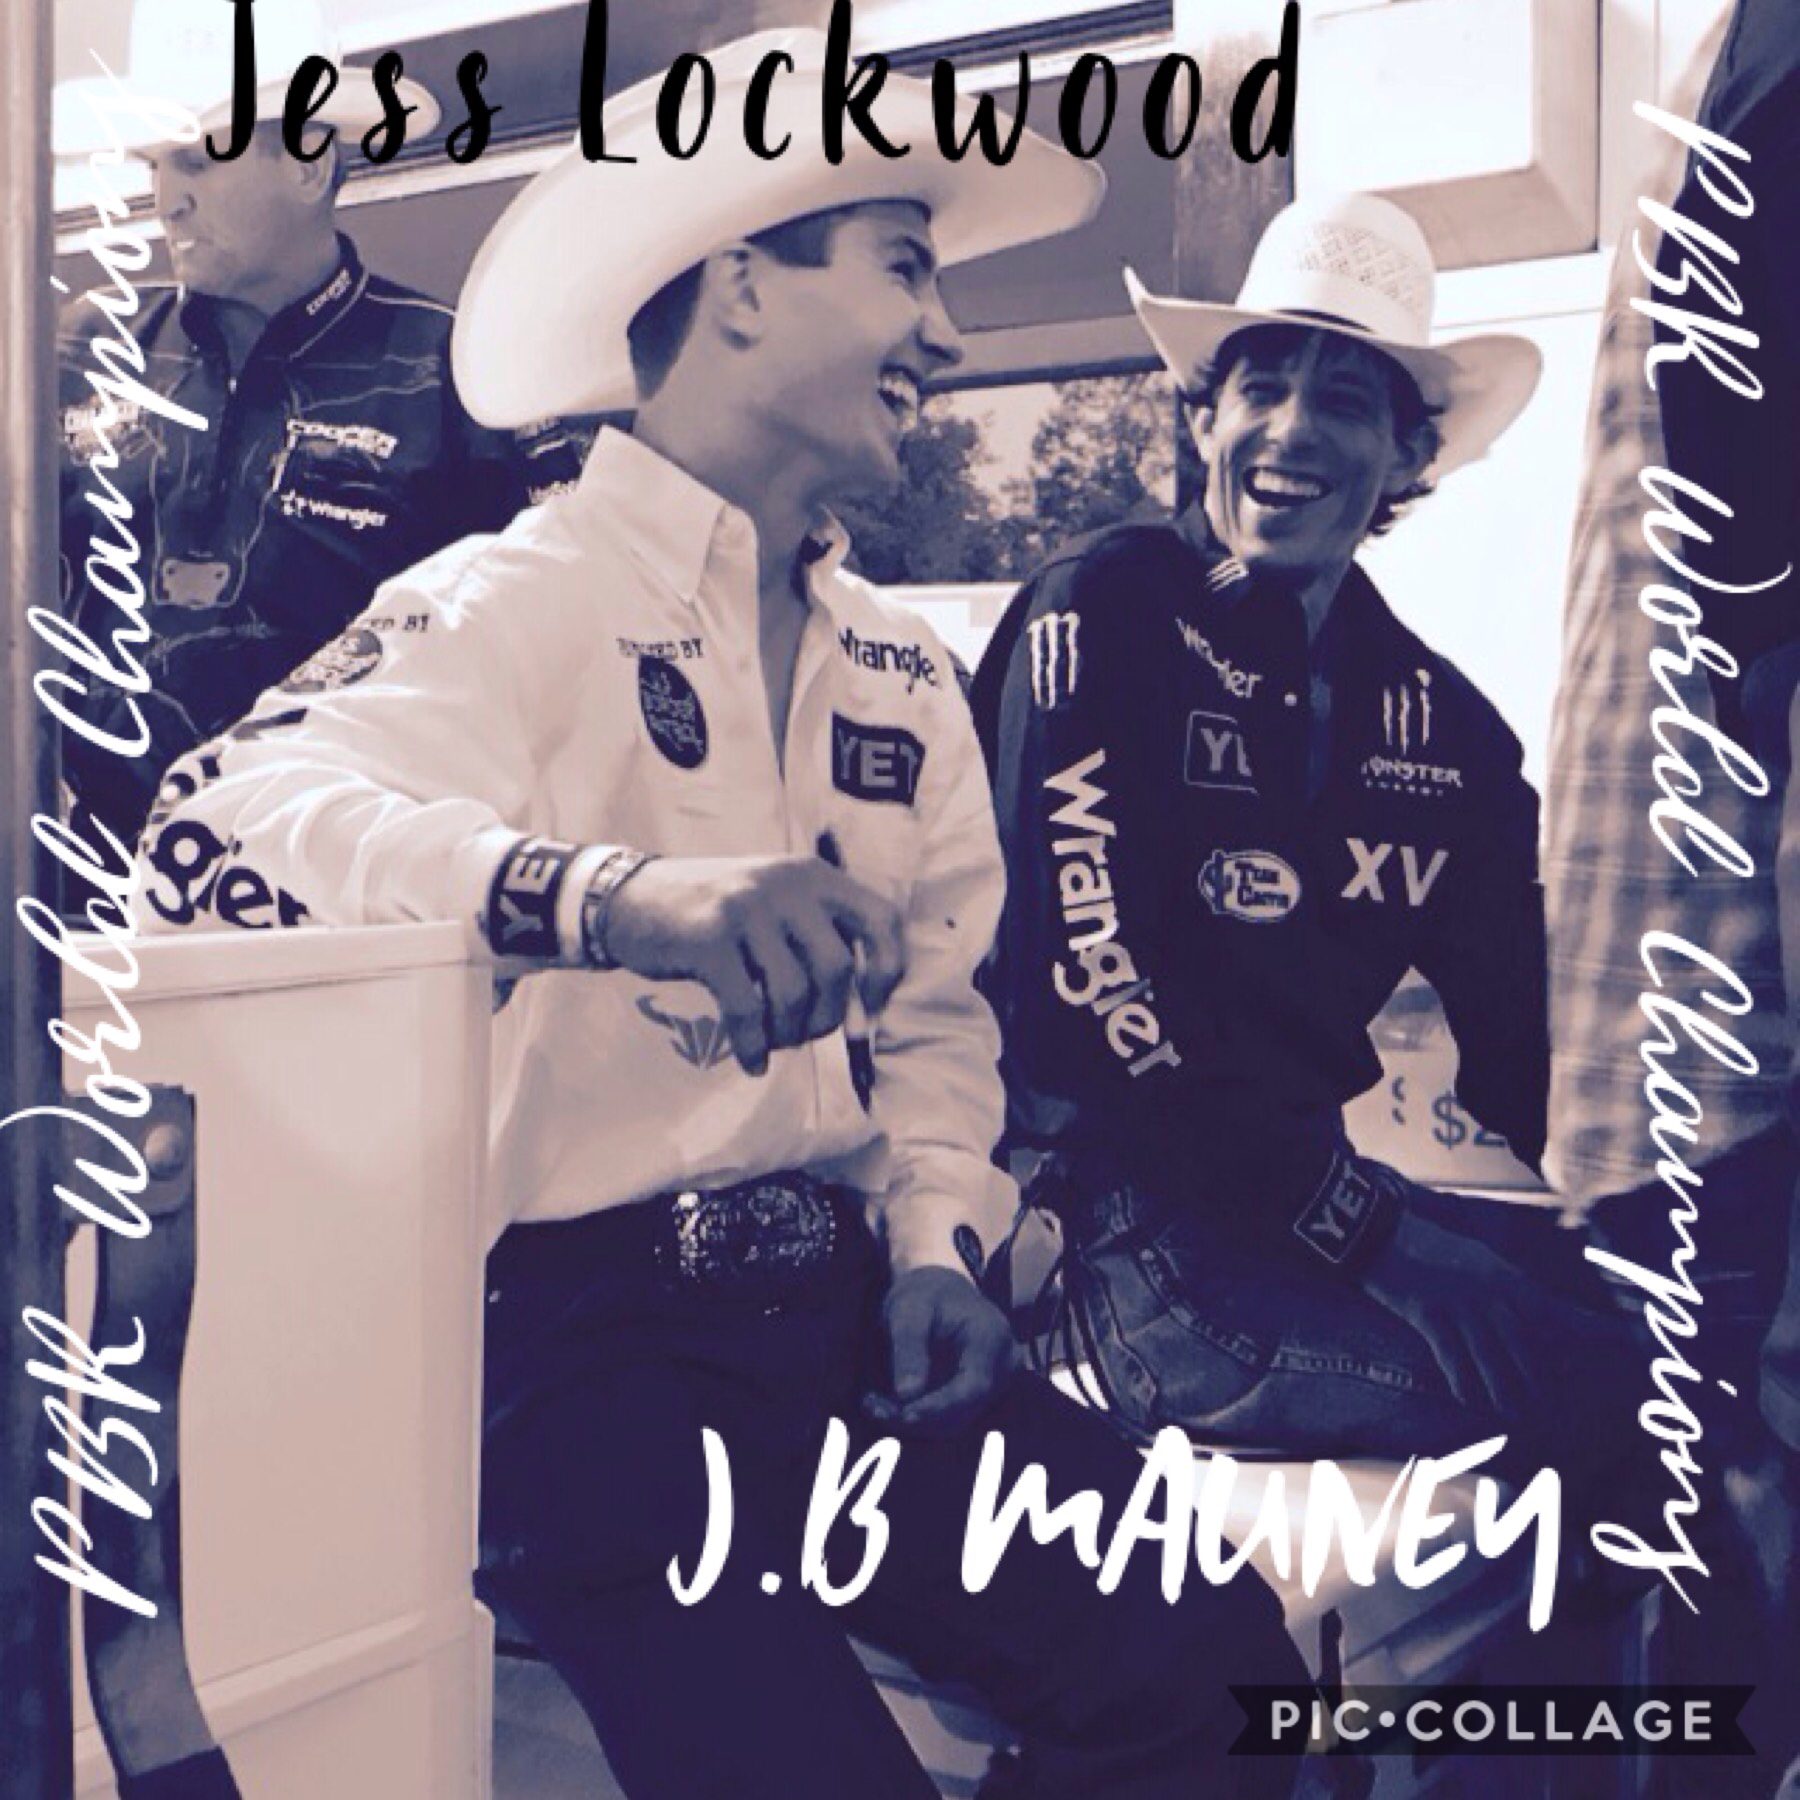 🐂Tap🐂
Got to meet Jess Lockwood & J.B. Mauney! Best day ever!